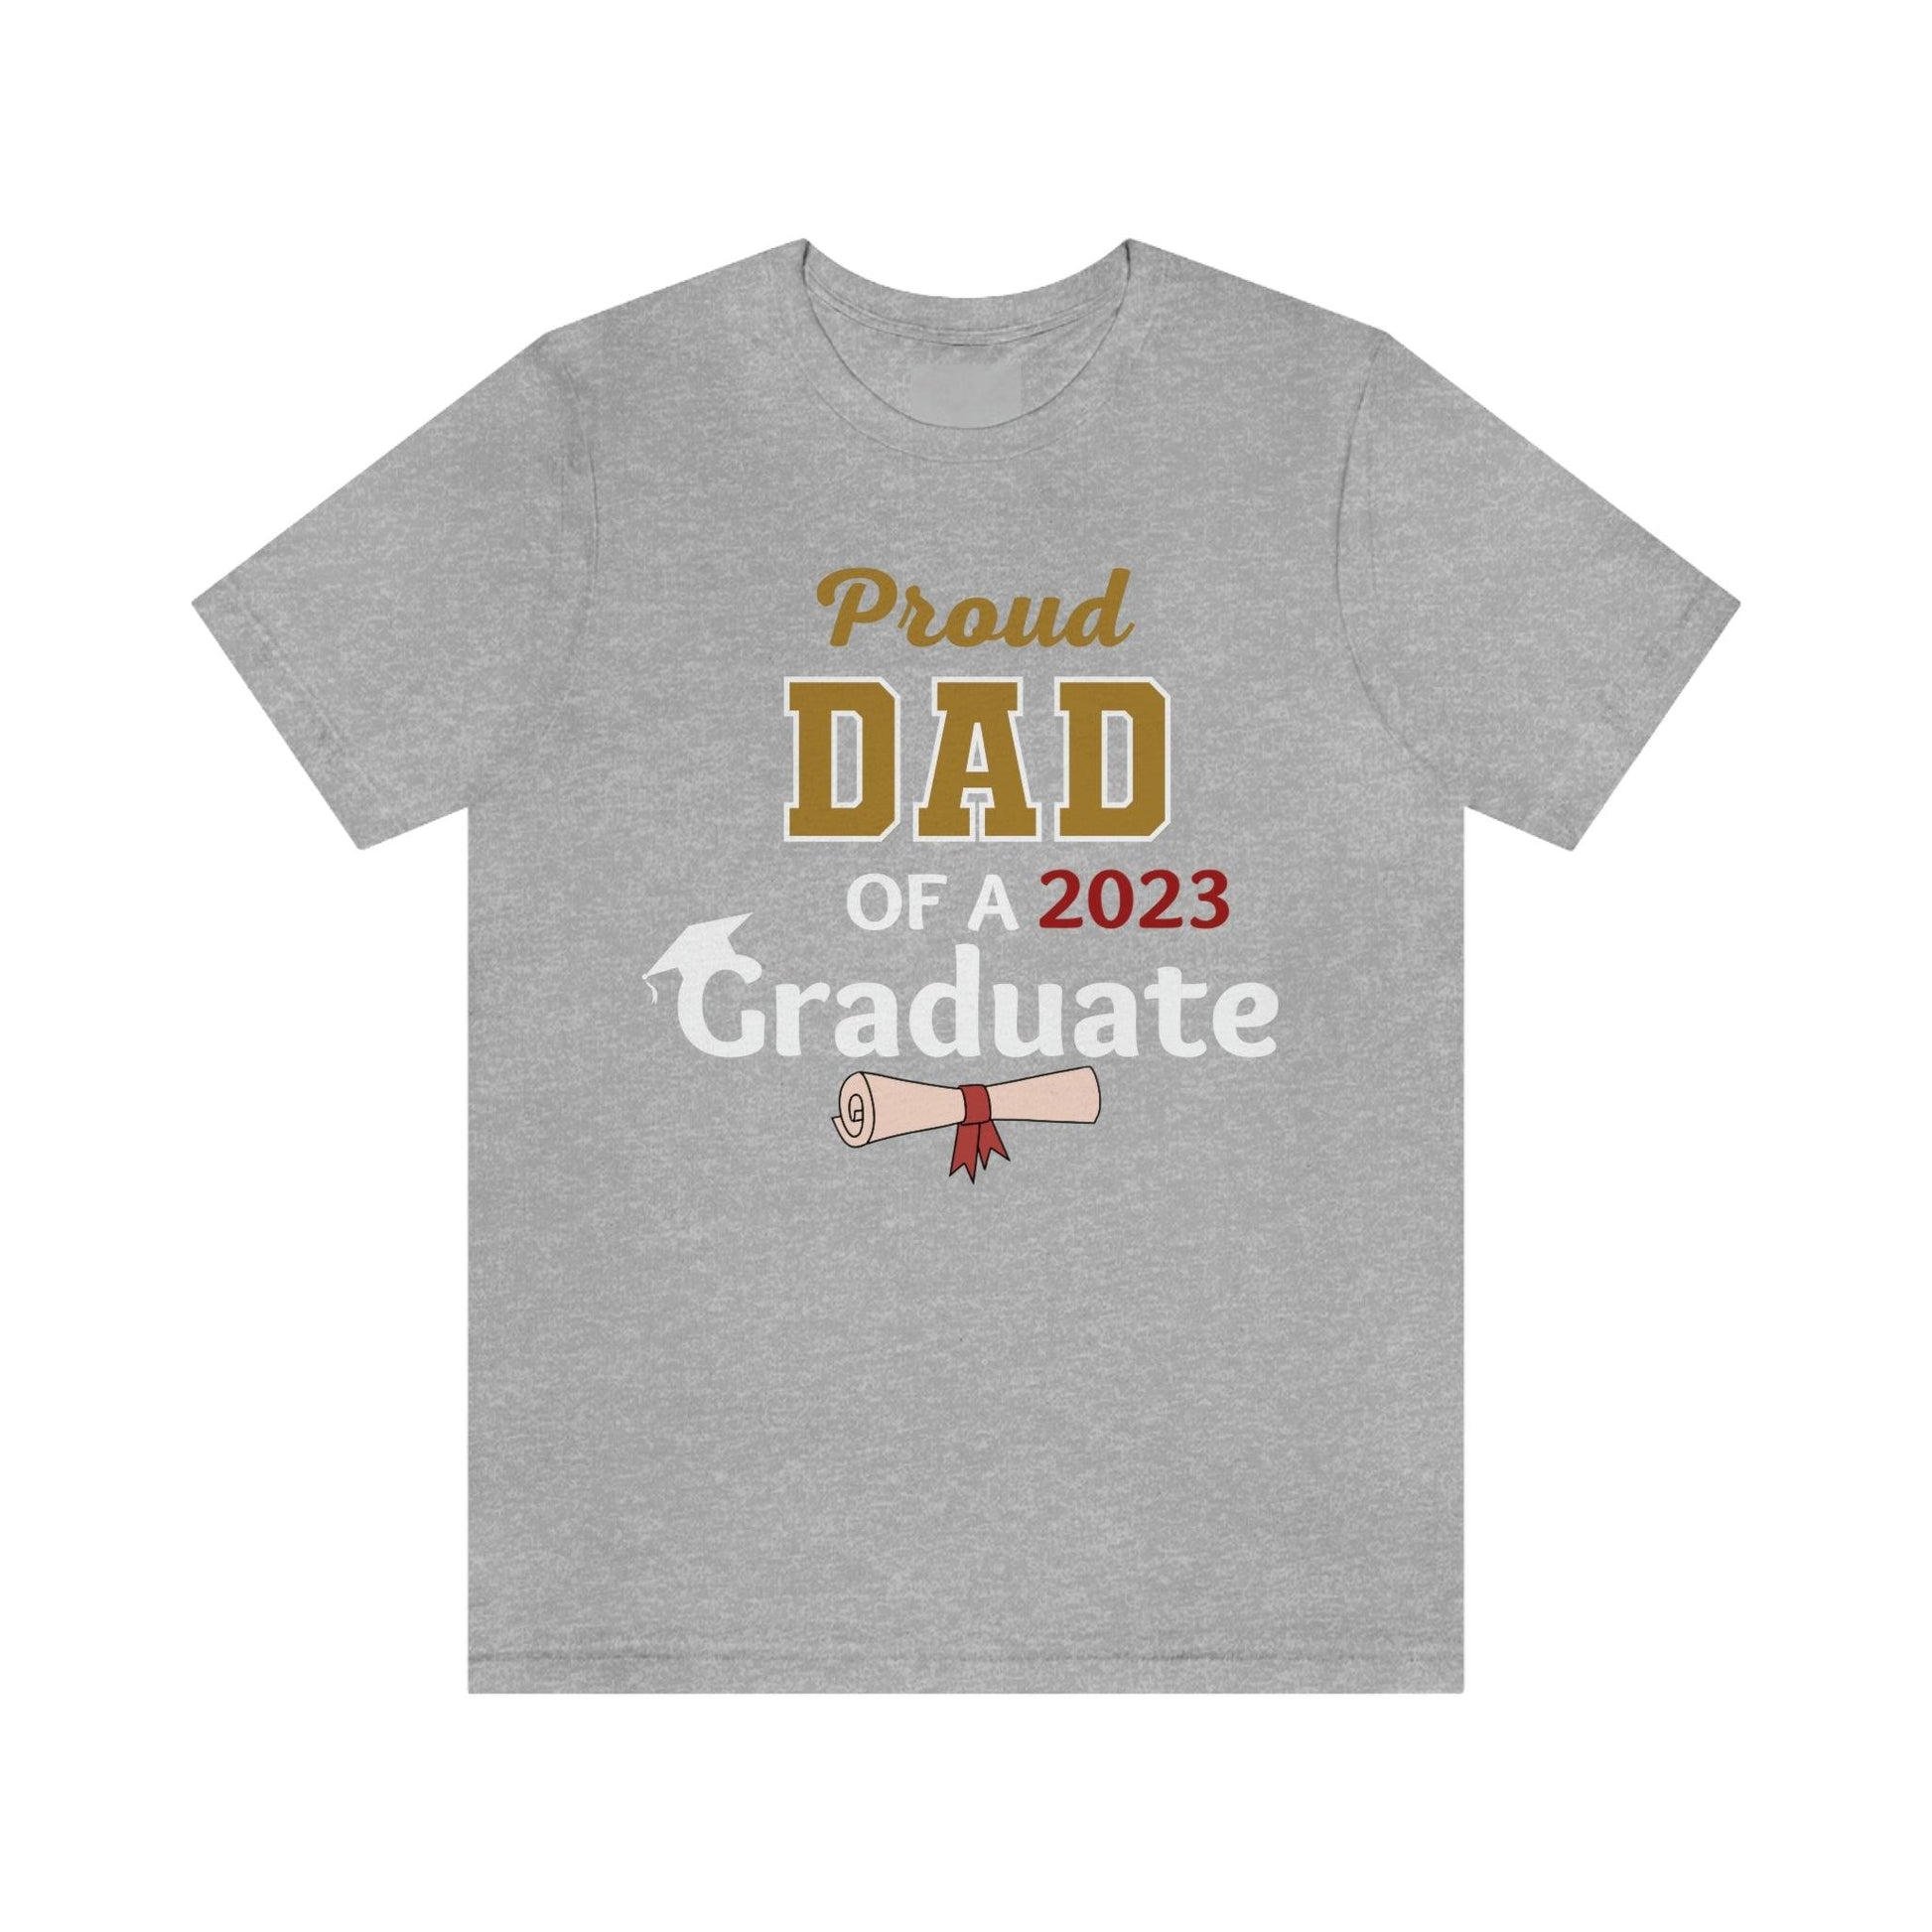 Proud Dad of a Graduate shirt - Graduation shirt - Graduation gift - Giftsmojo